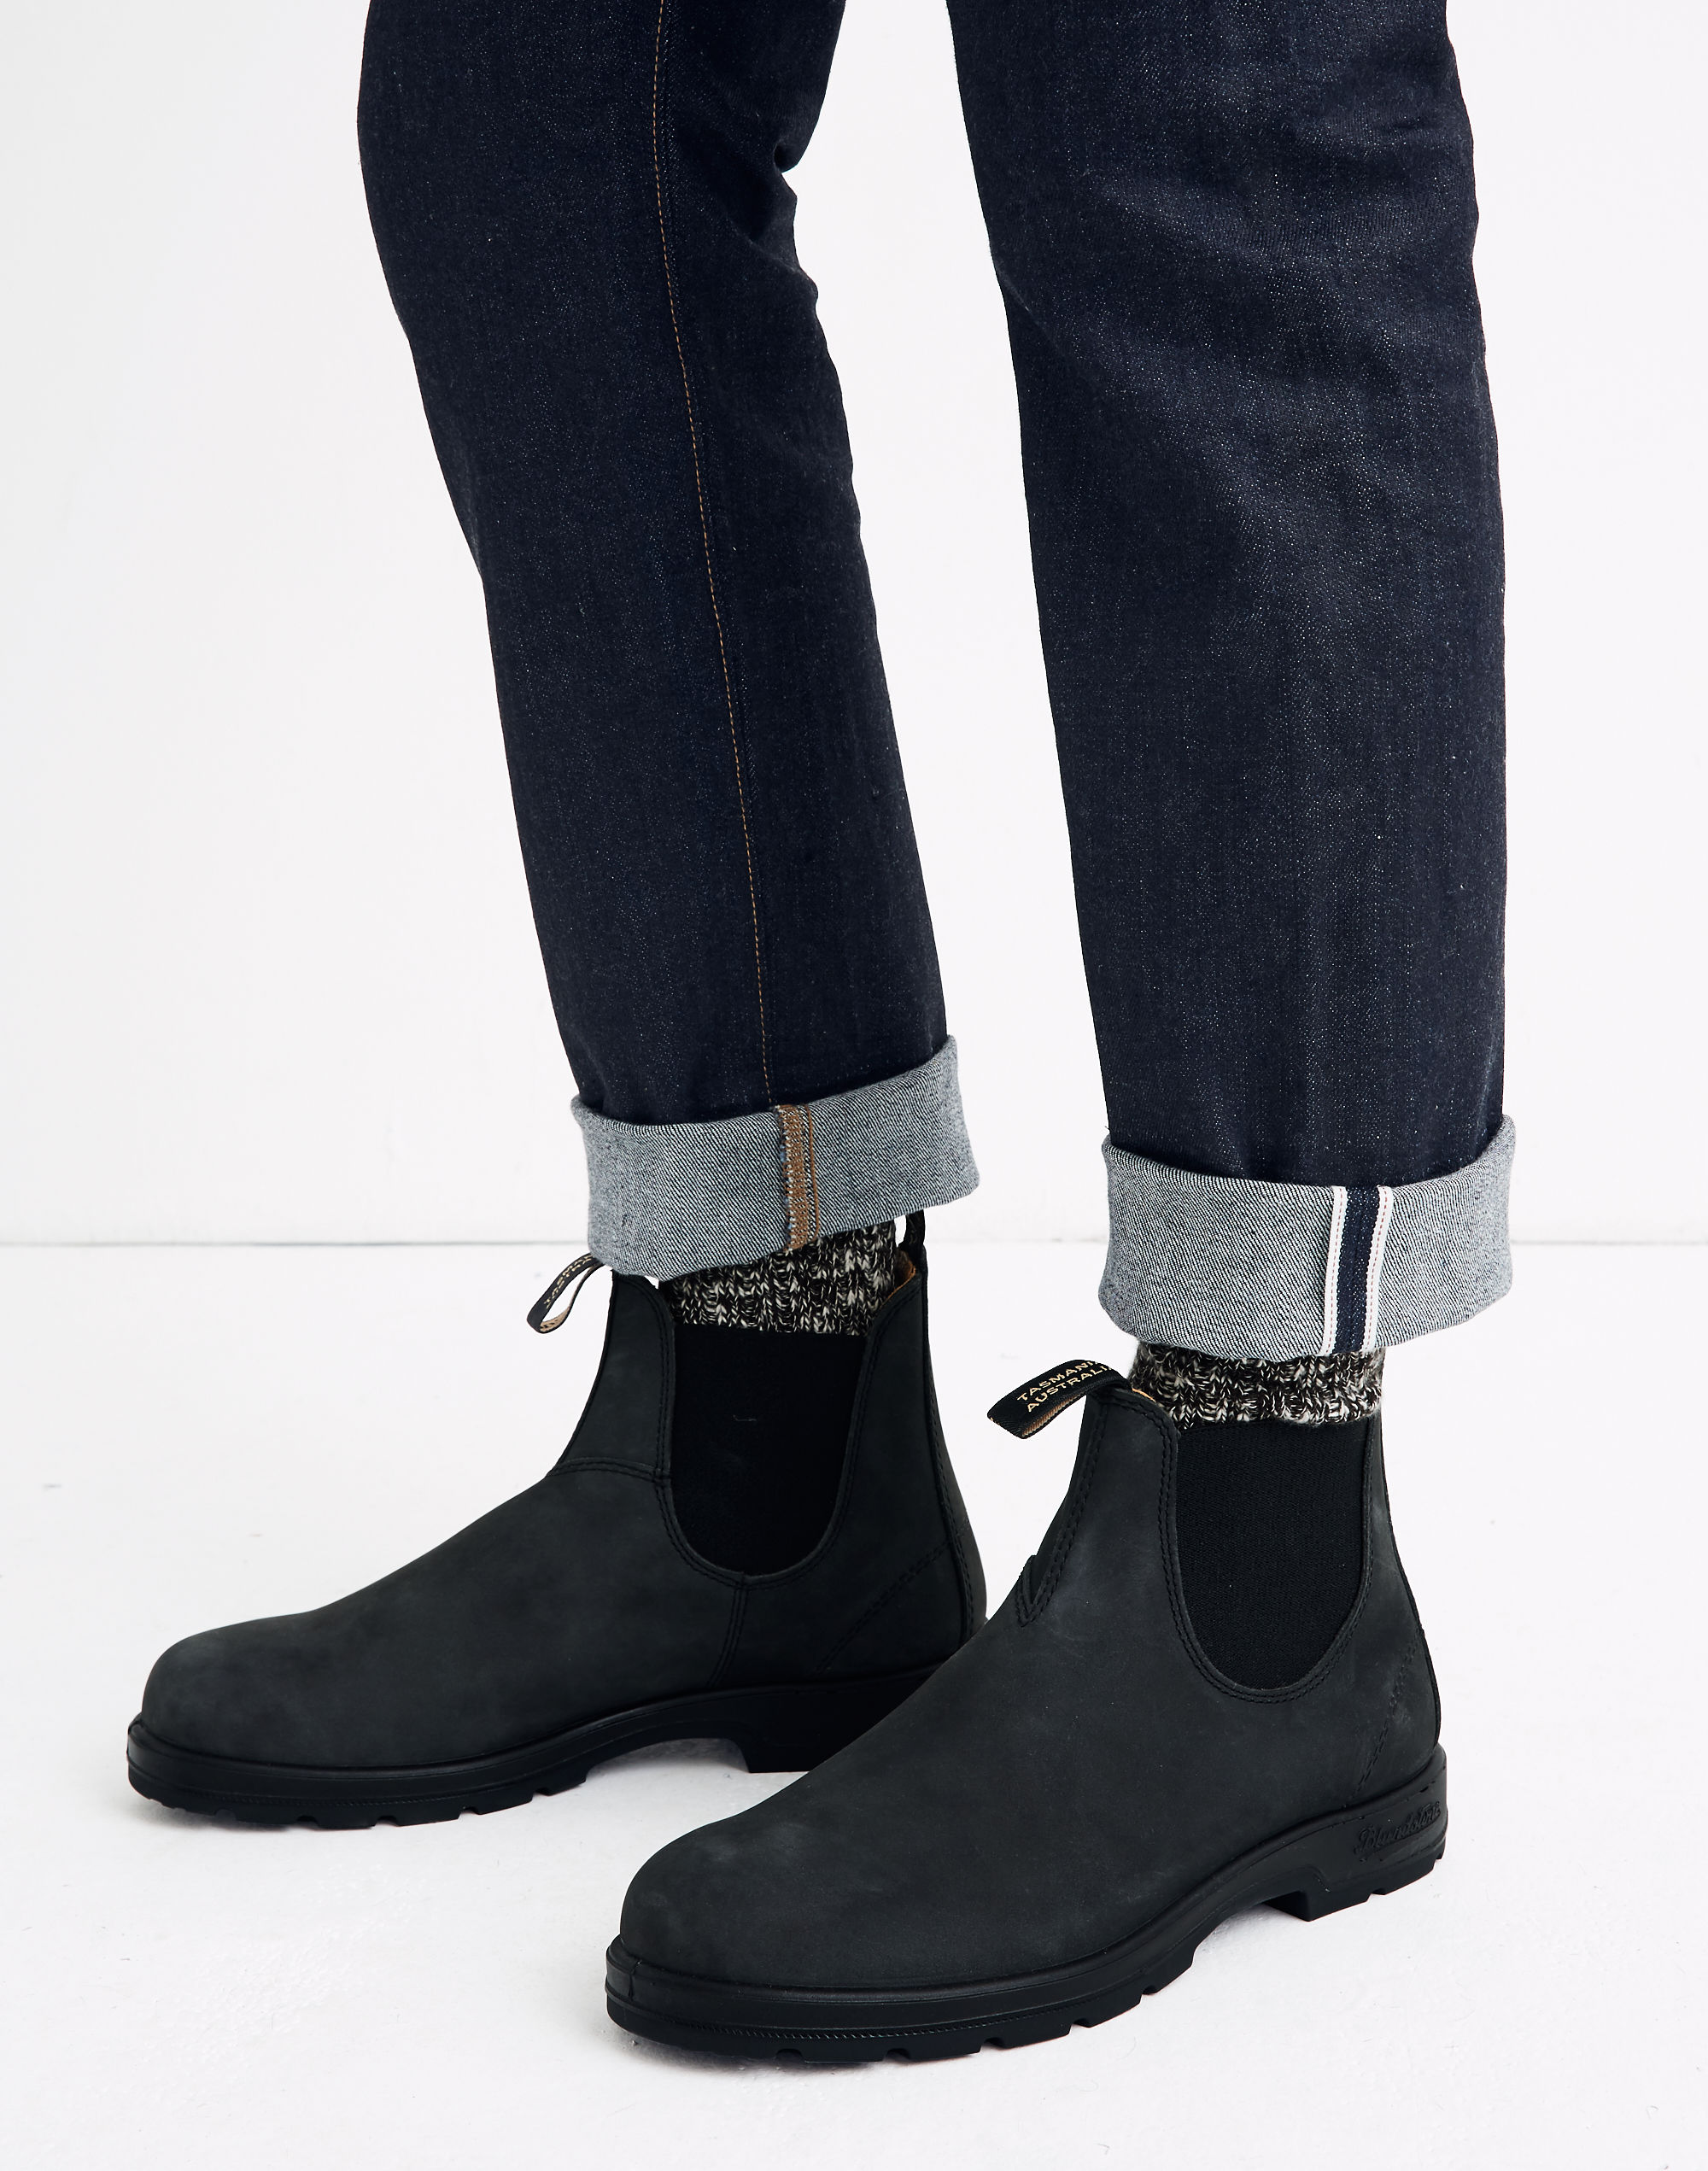 Blundstone® Men's Classic Chelsea Boots